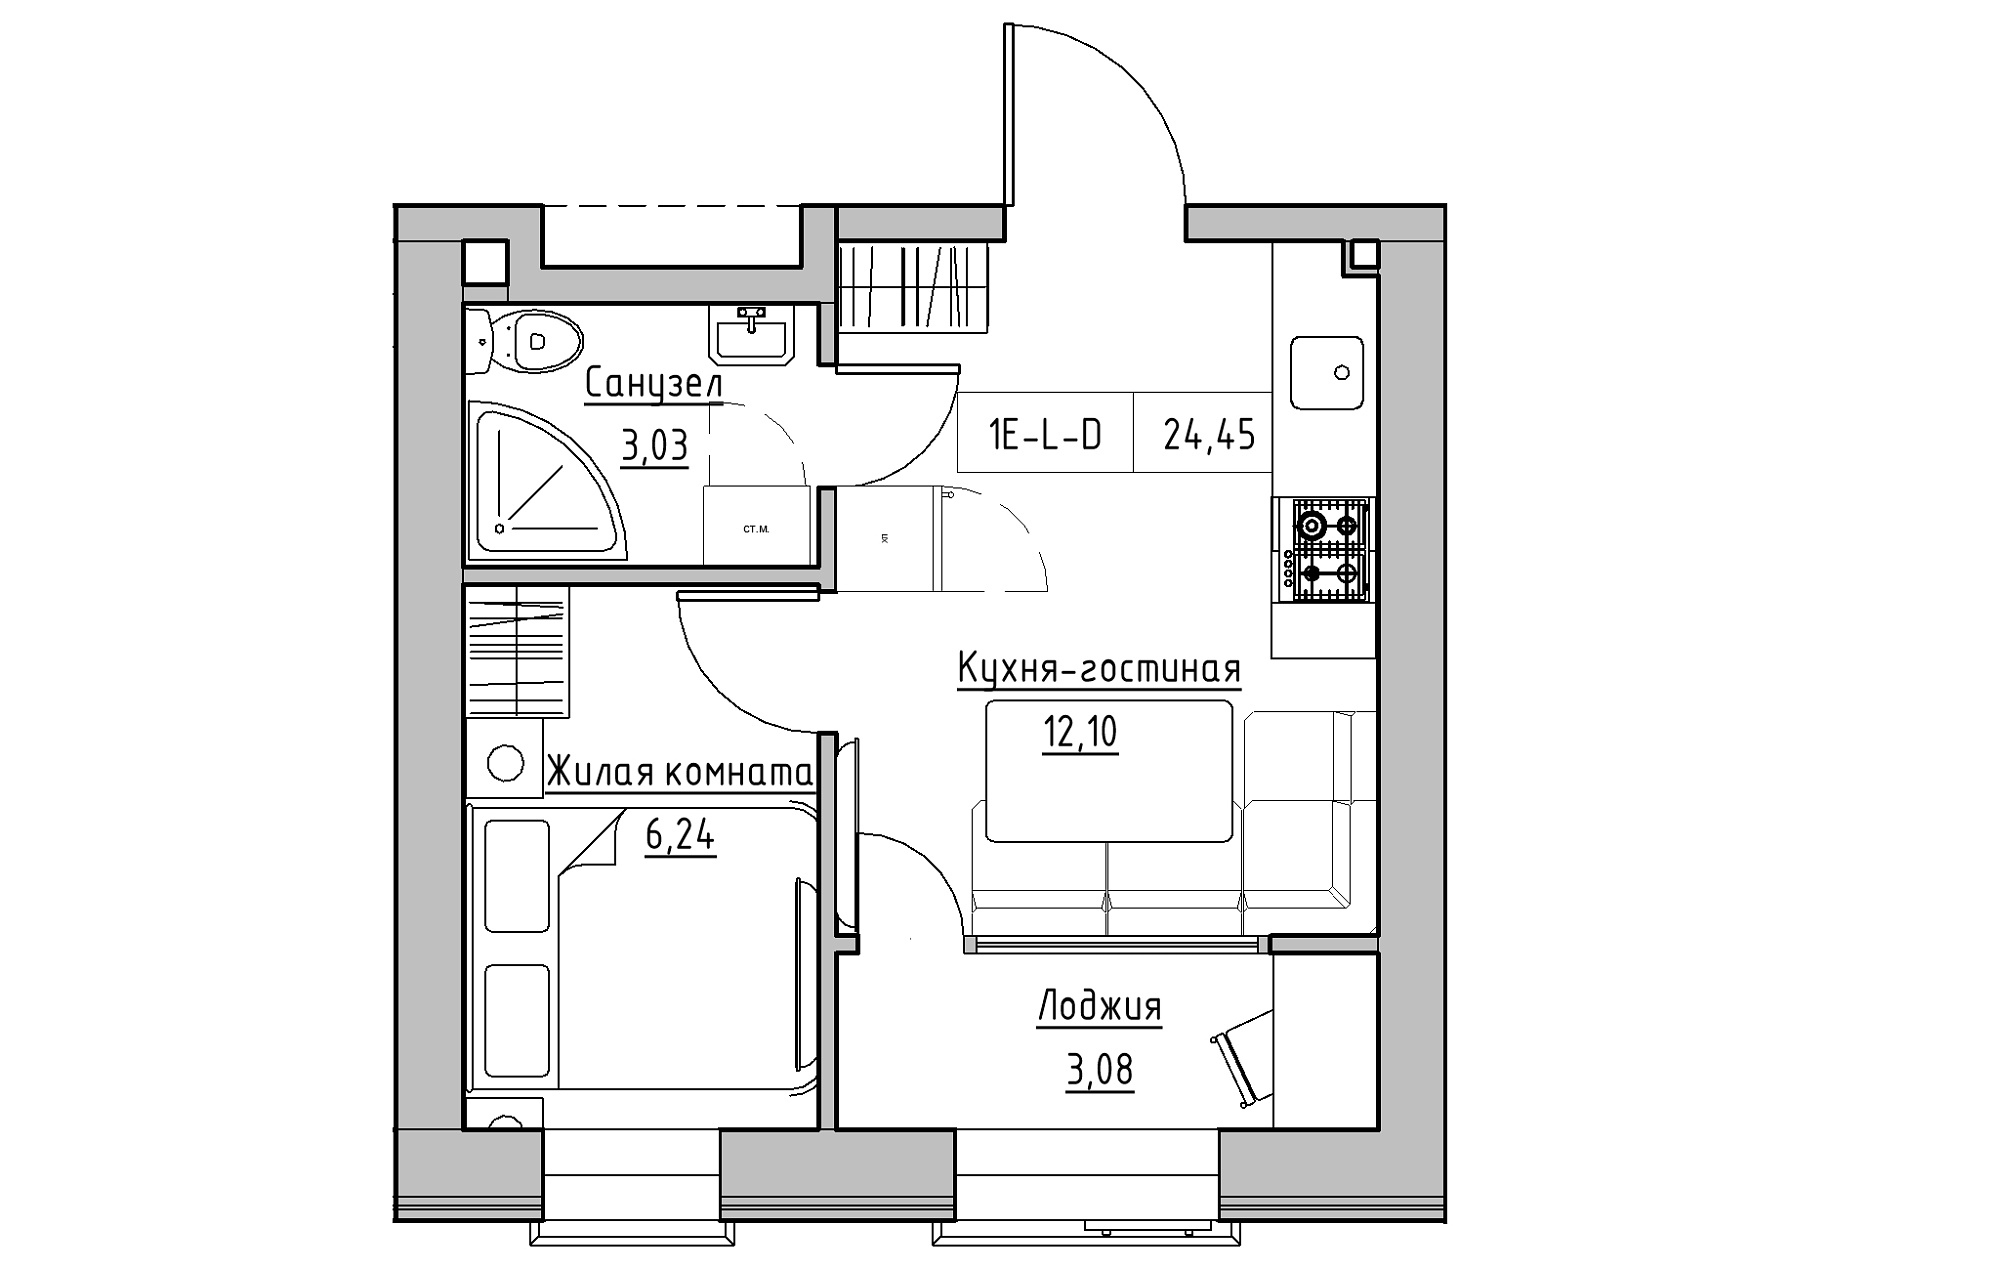 Planning 1-rm flats area 24.45m2, KS-018-04/0002.